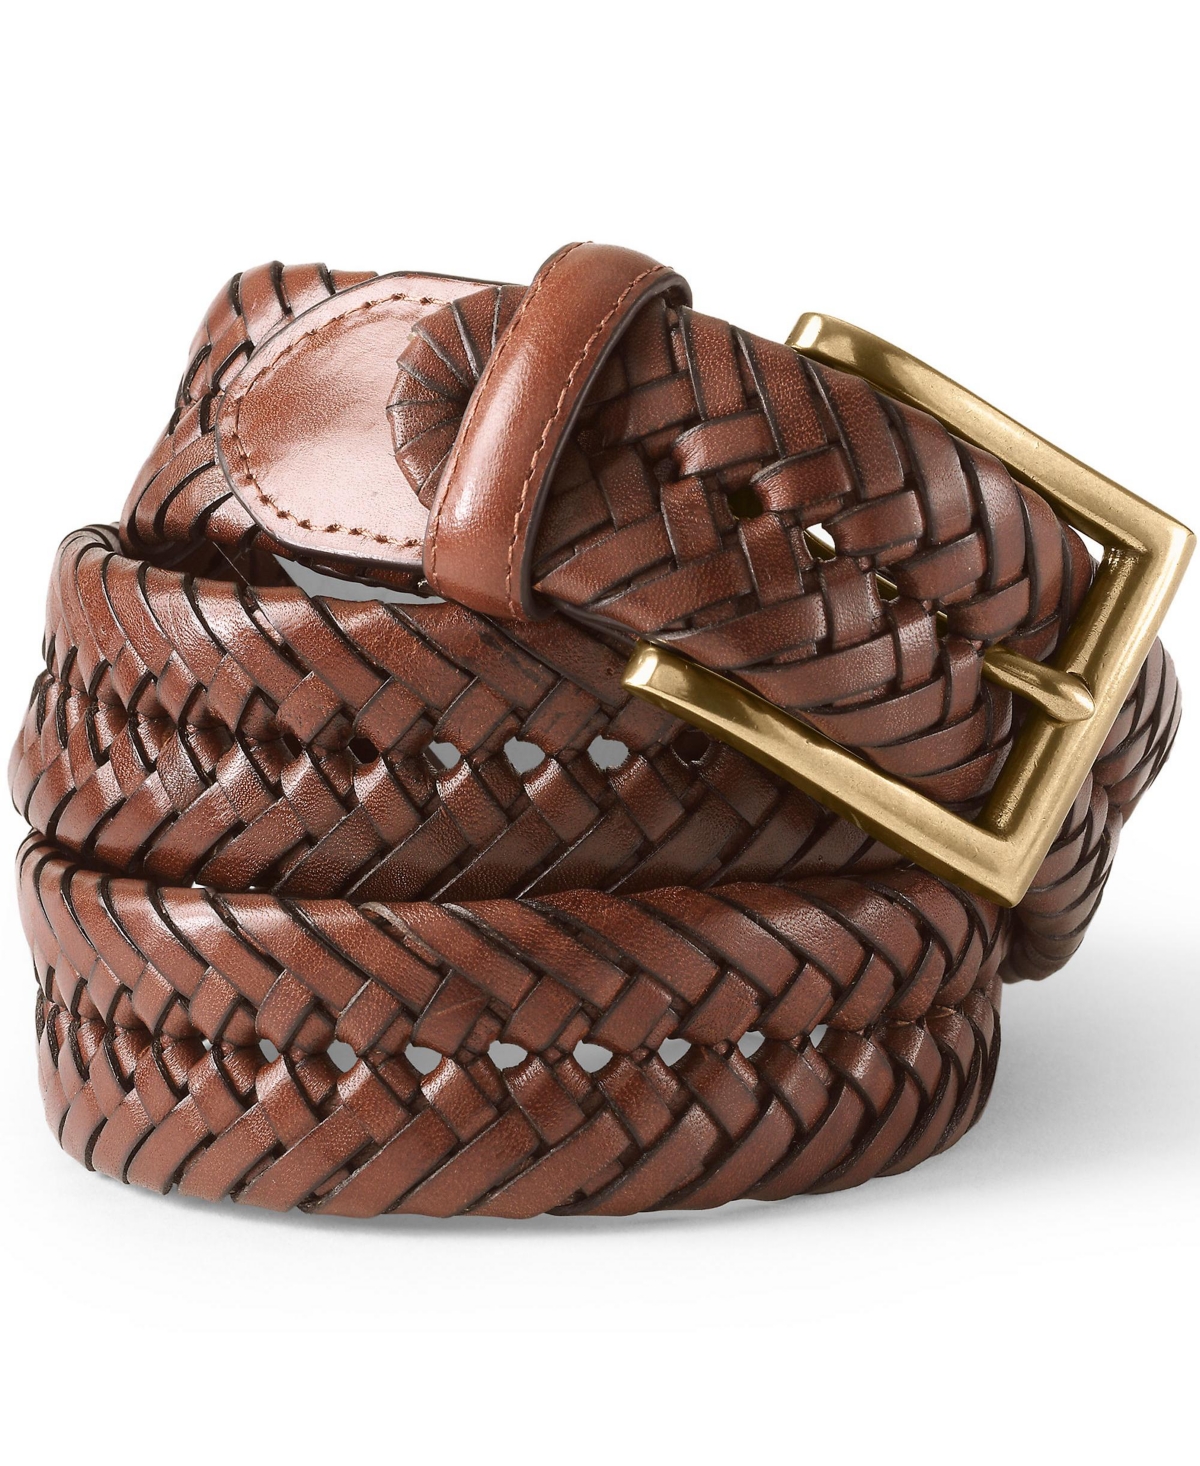 Men's Leather Braid Belt - Light brown